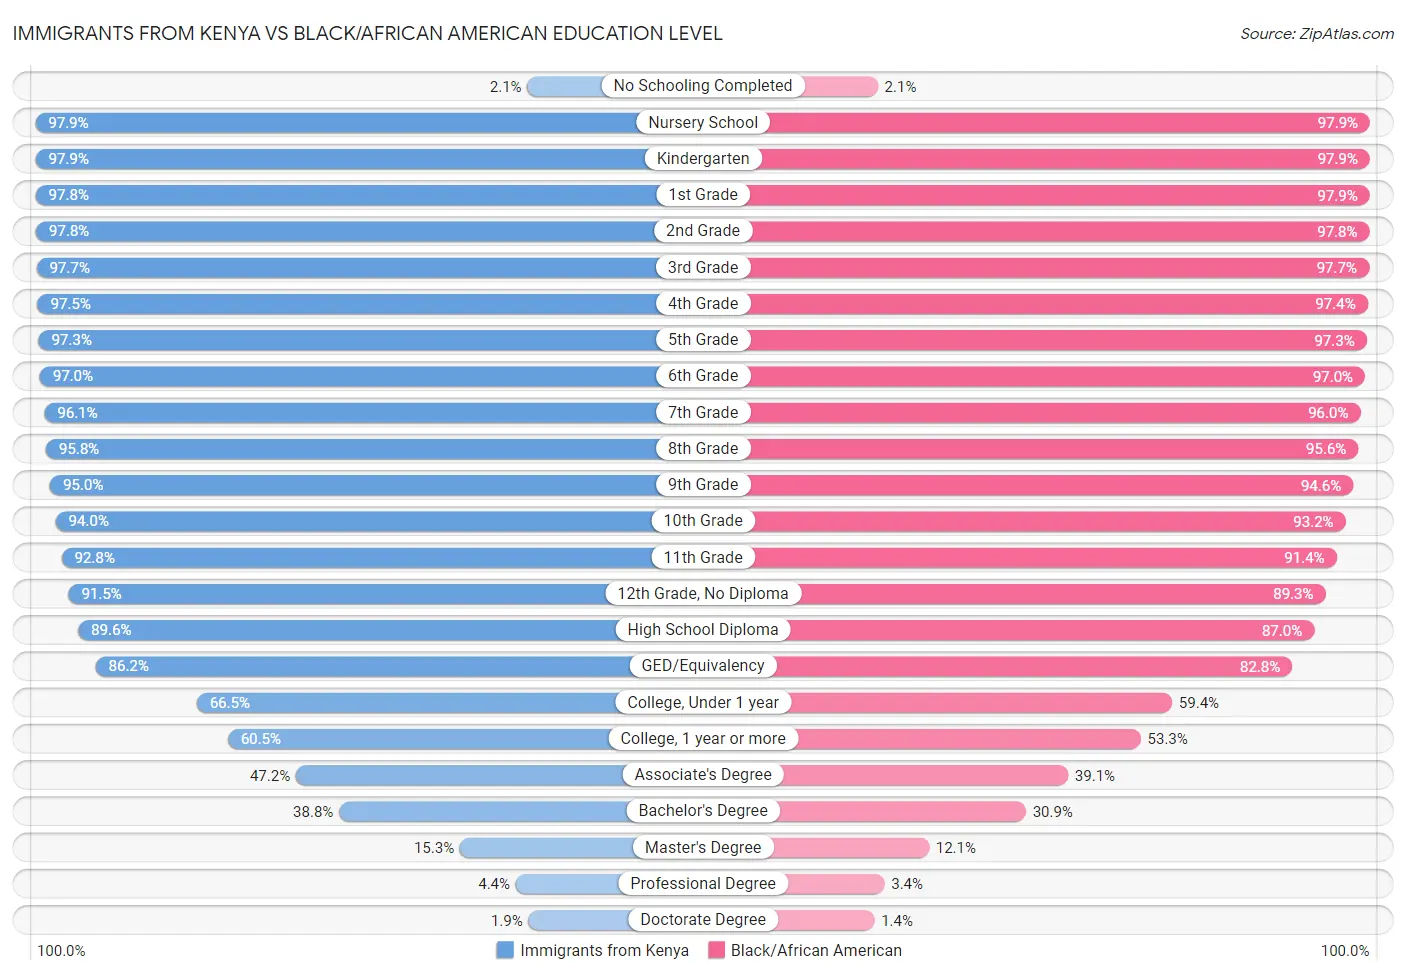 Immigrants from Kenya vs Black/African American Education Level